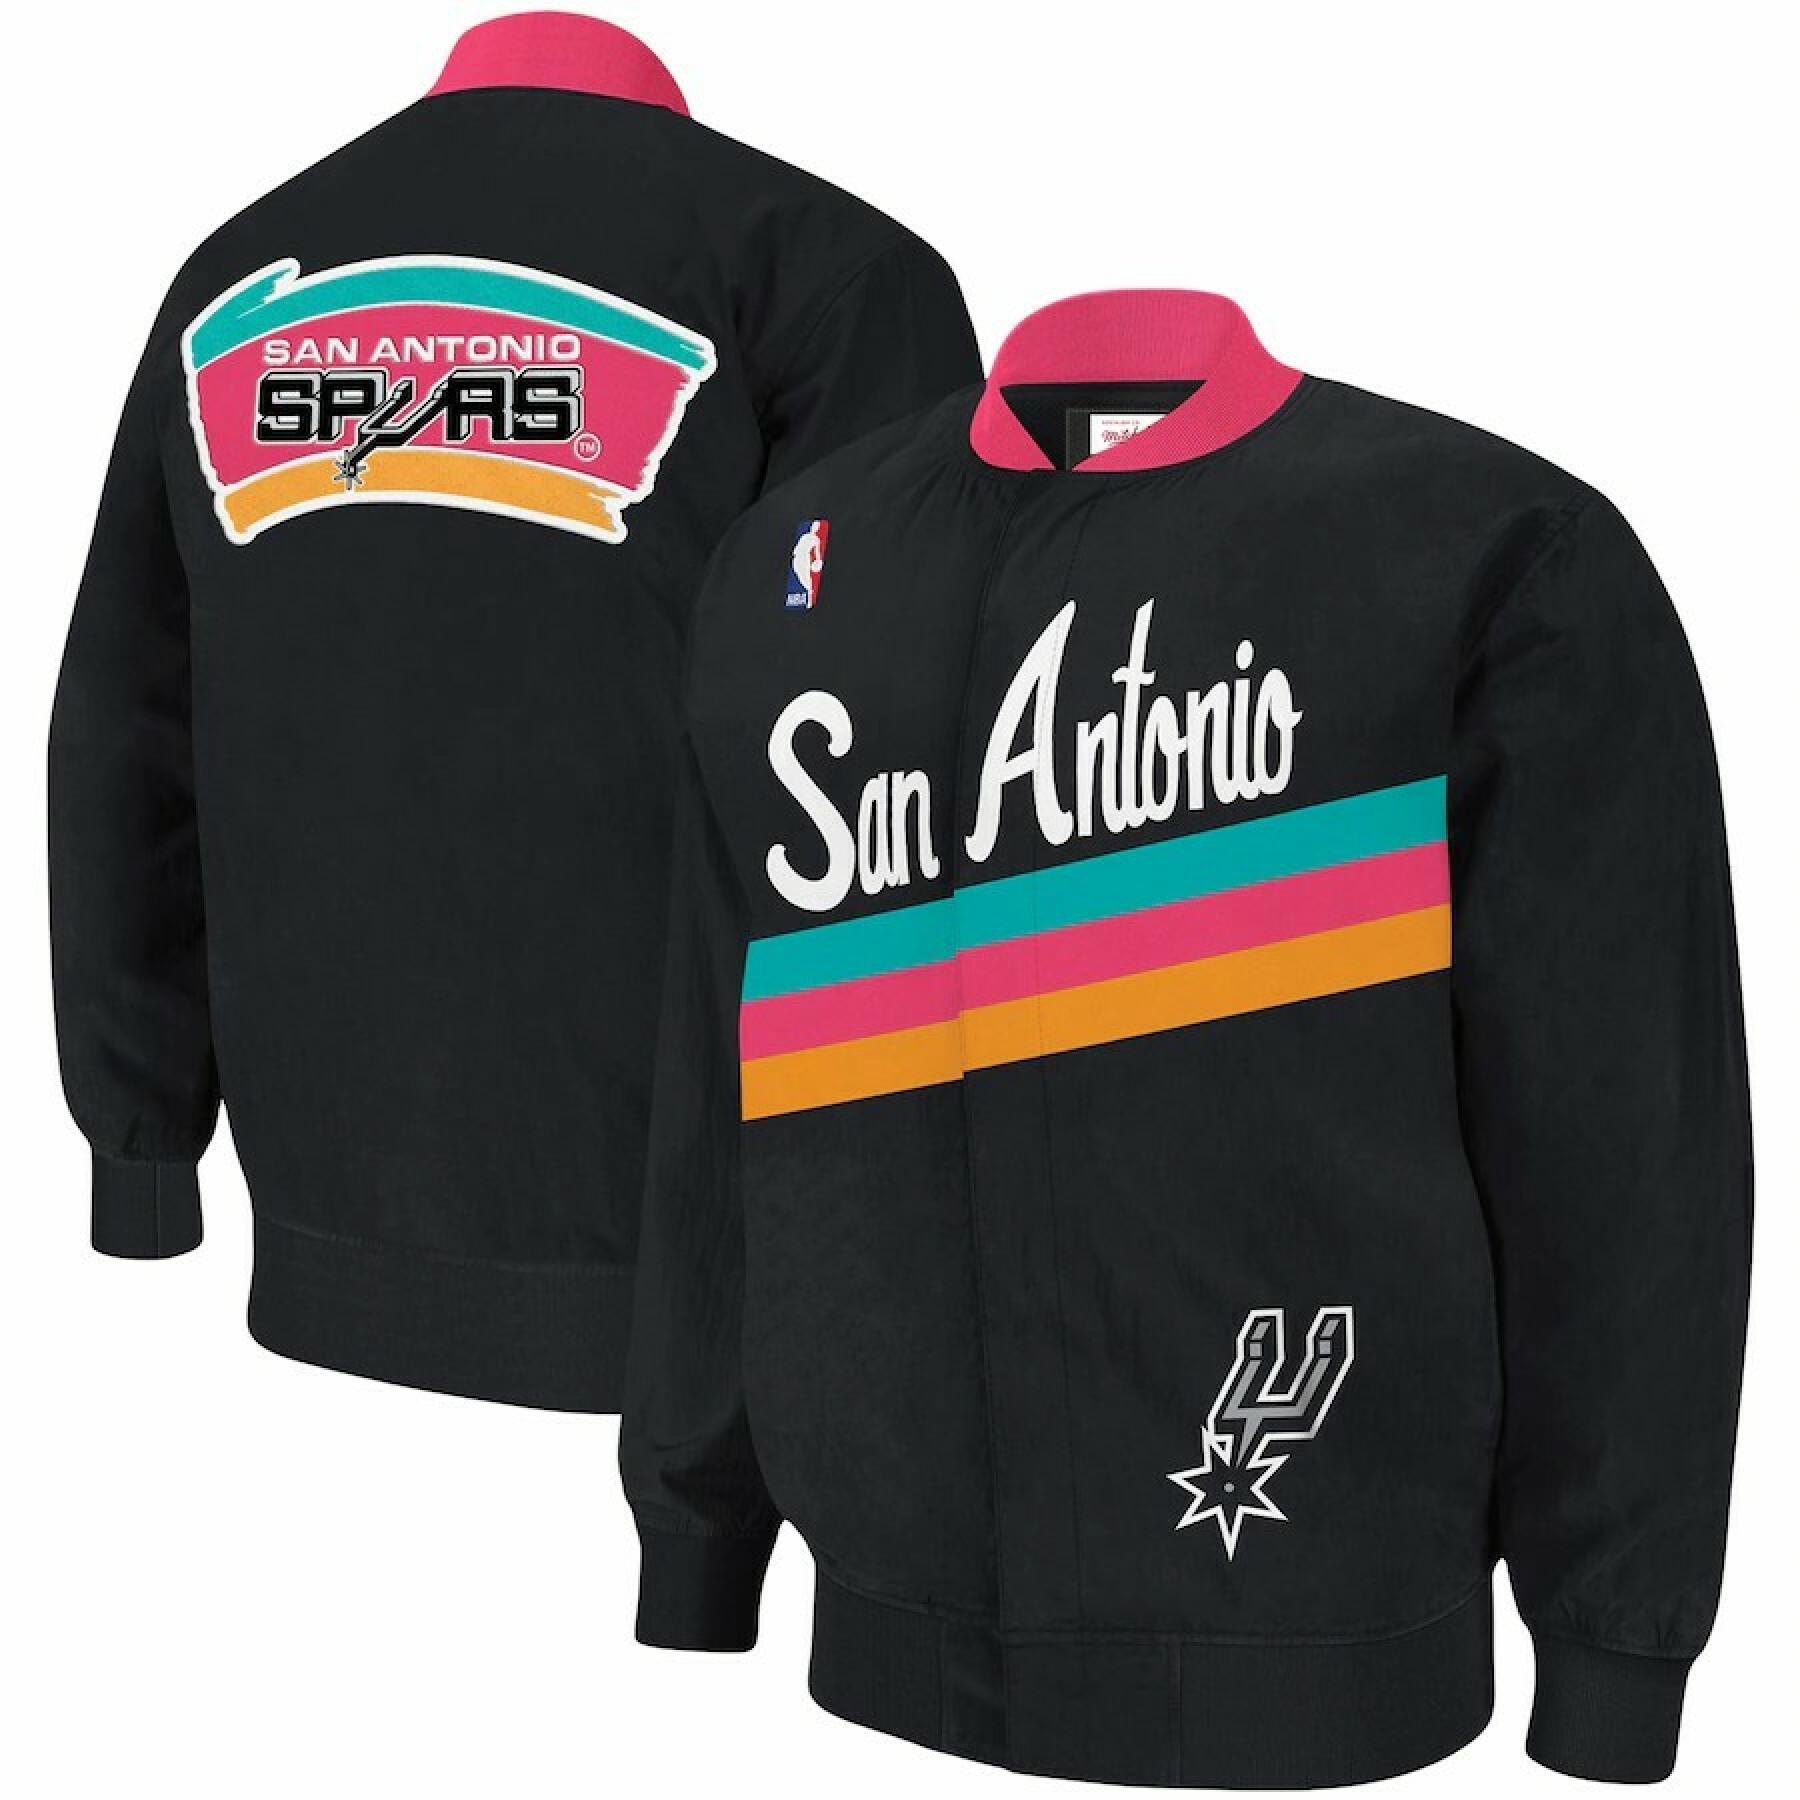 Jaqueta San Antonio Spurs authentic